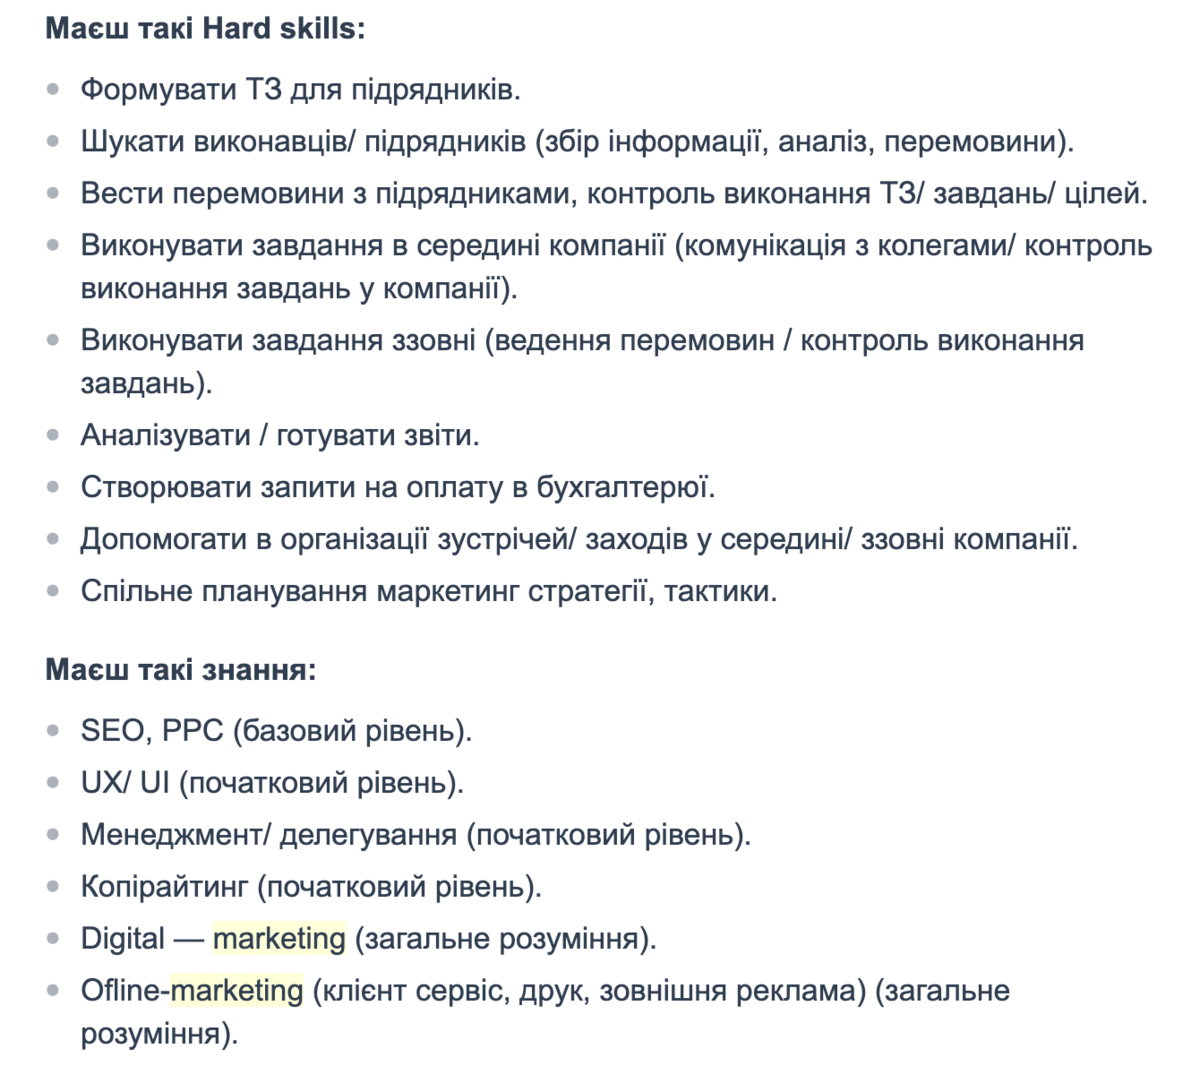 Описание вакансии менеджера по маркетингу с Work.ua